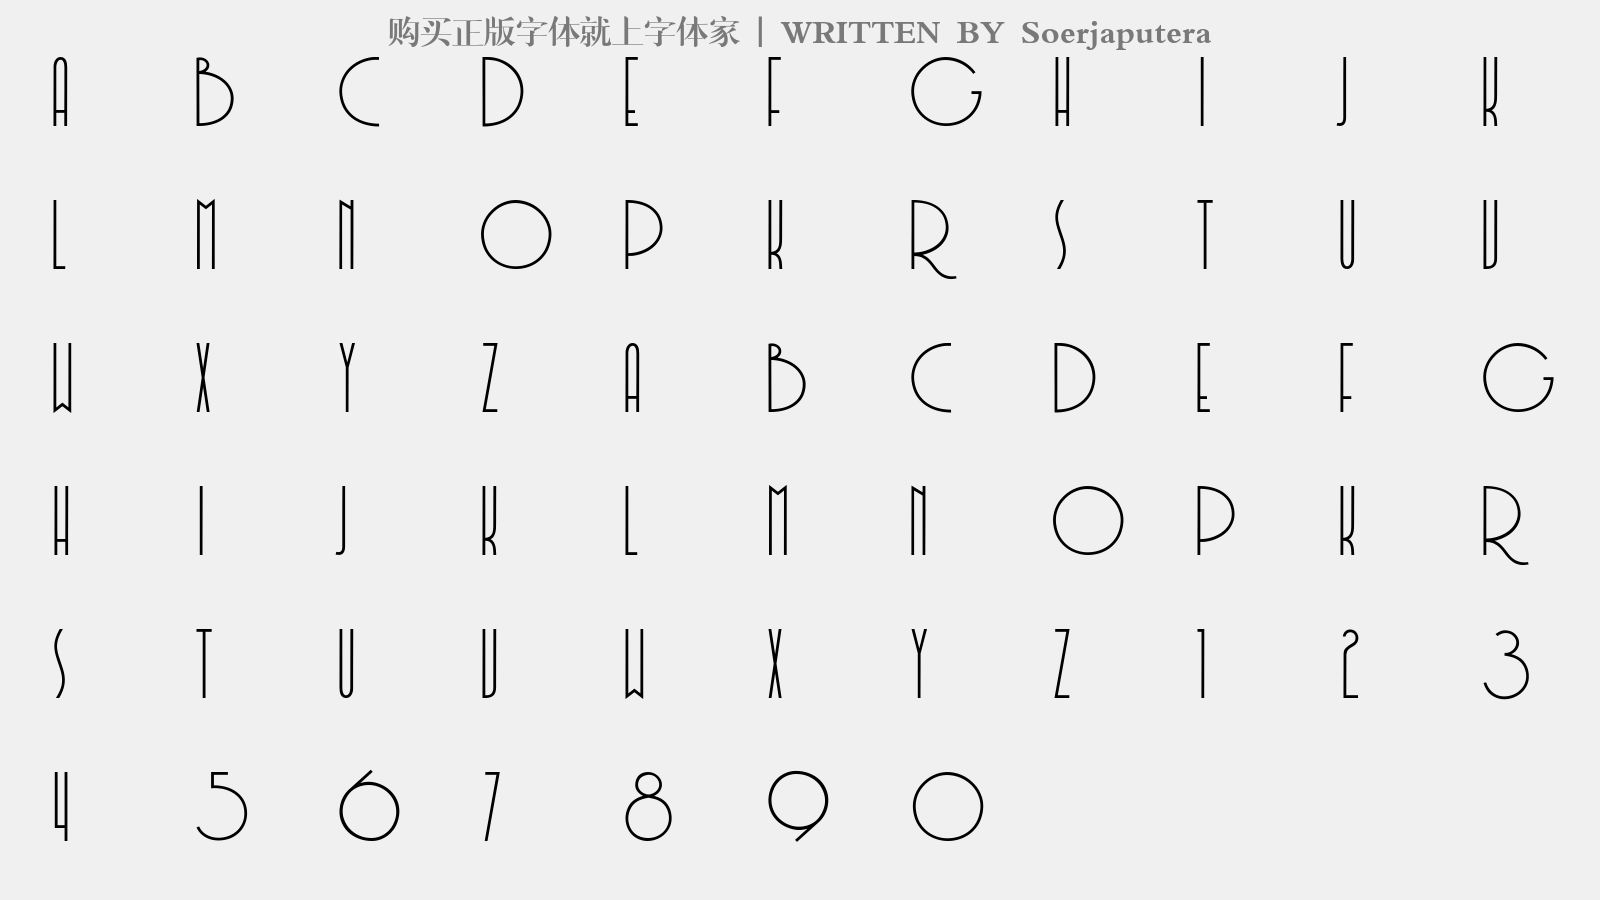 Soerjaputera - 大写字母/小写字母/数字